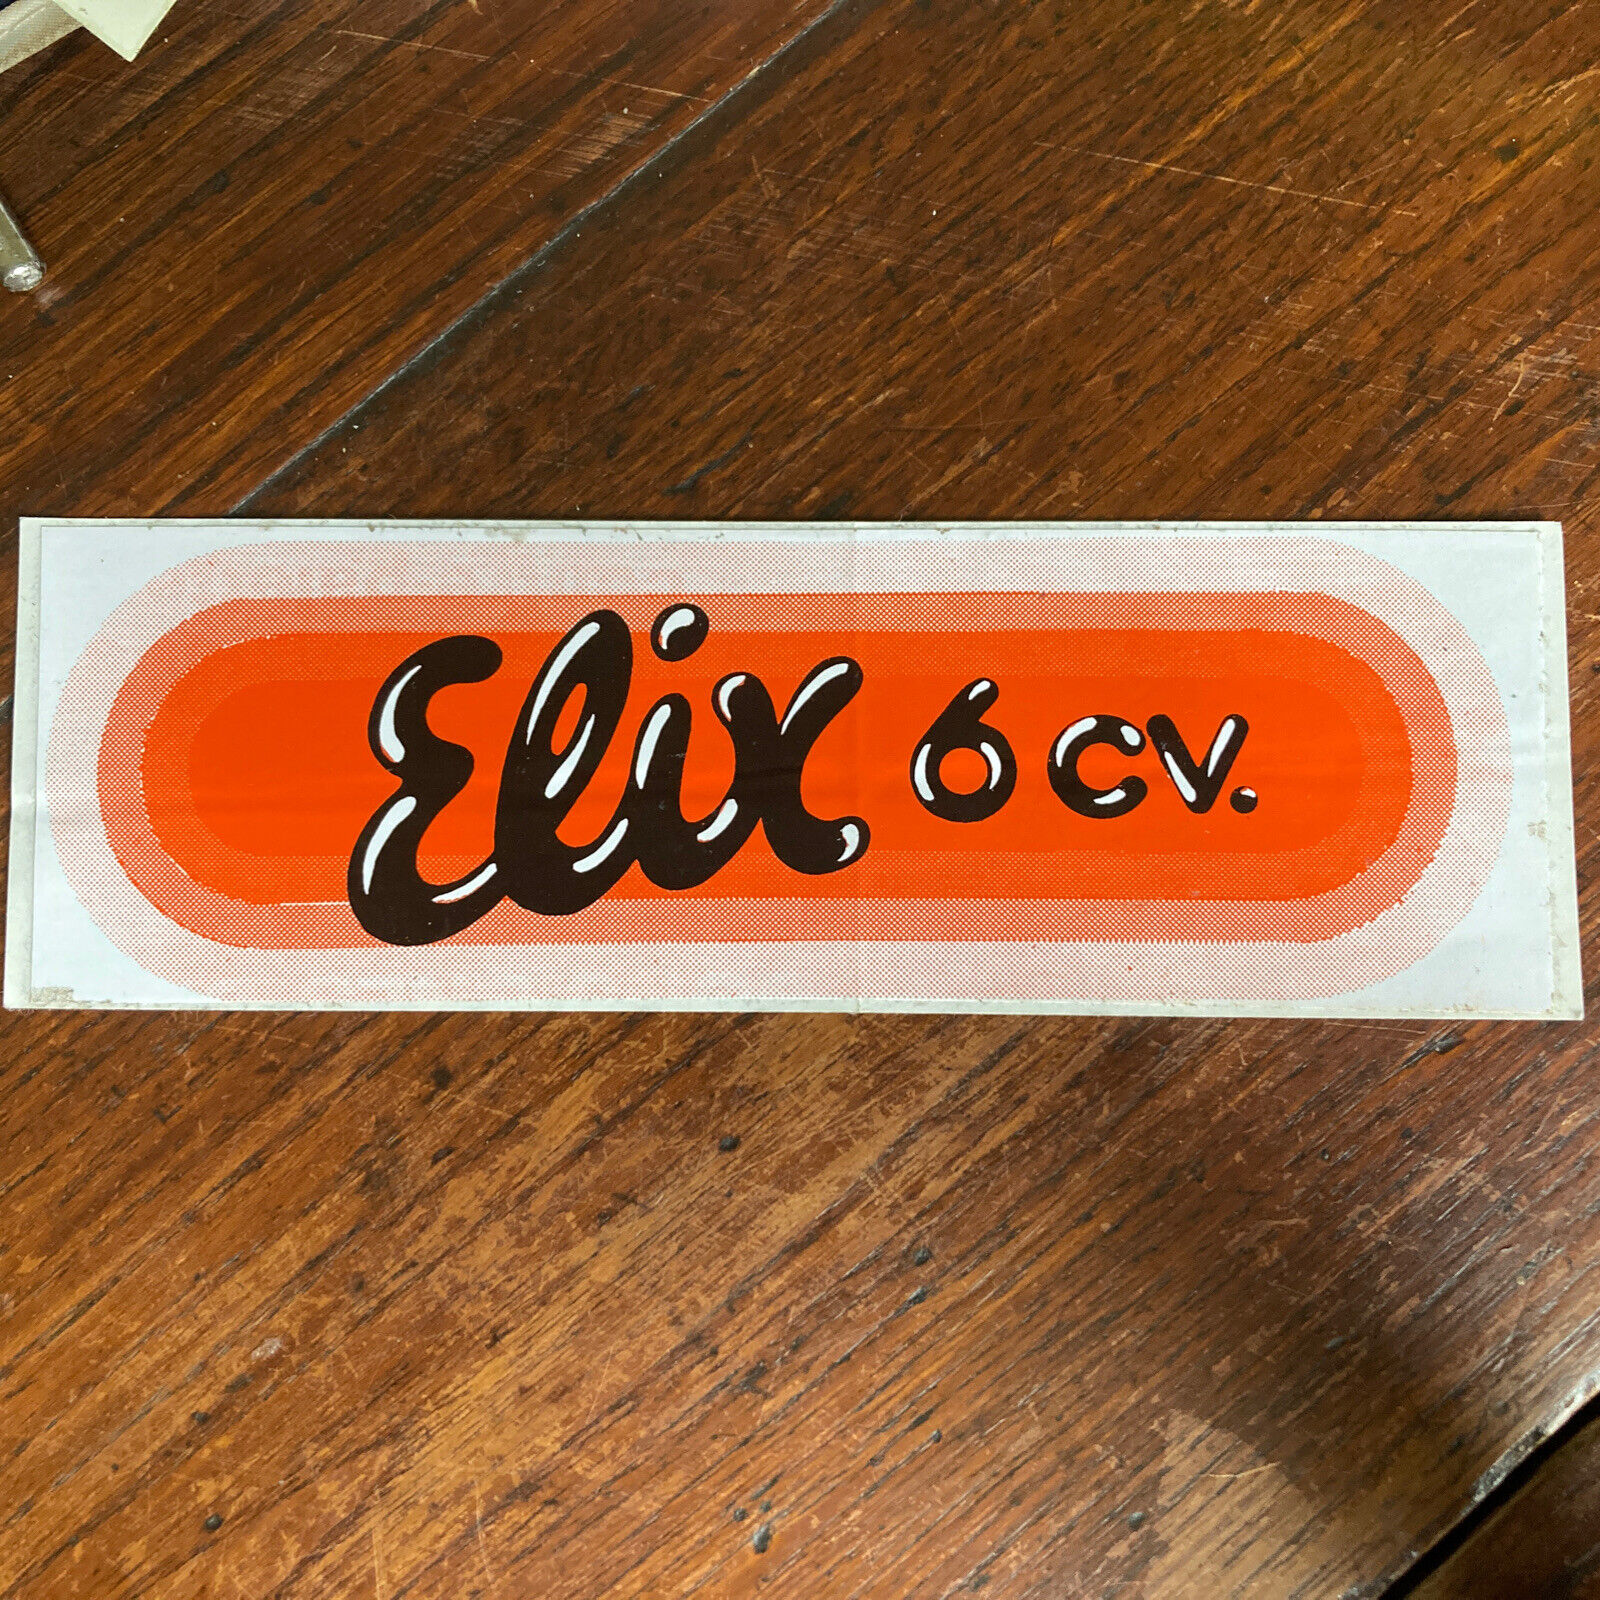 Vintage Elix 6cv Advertising Sticker